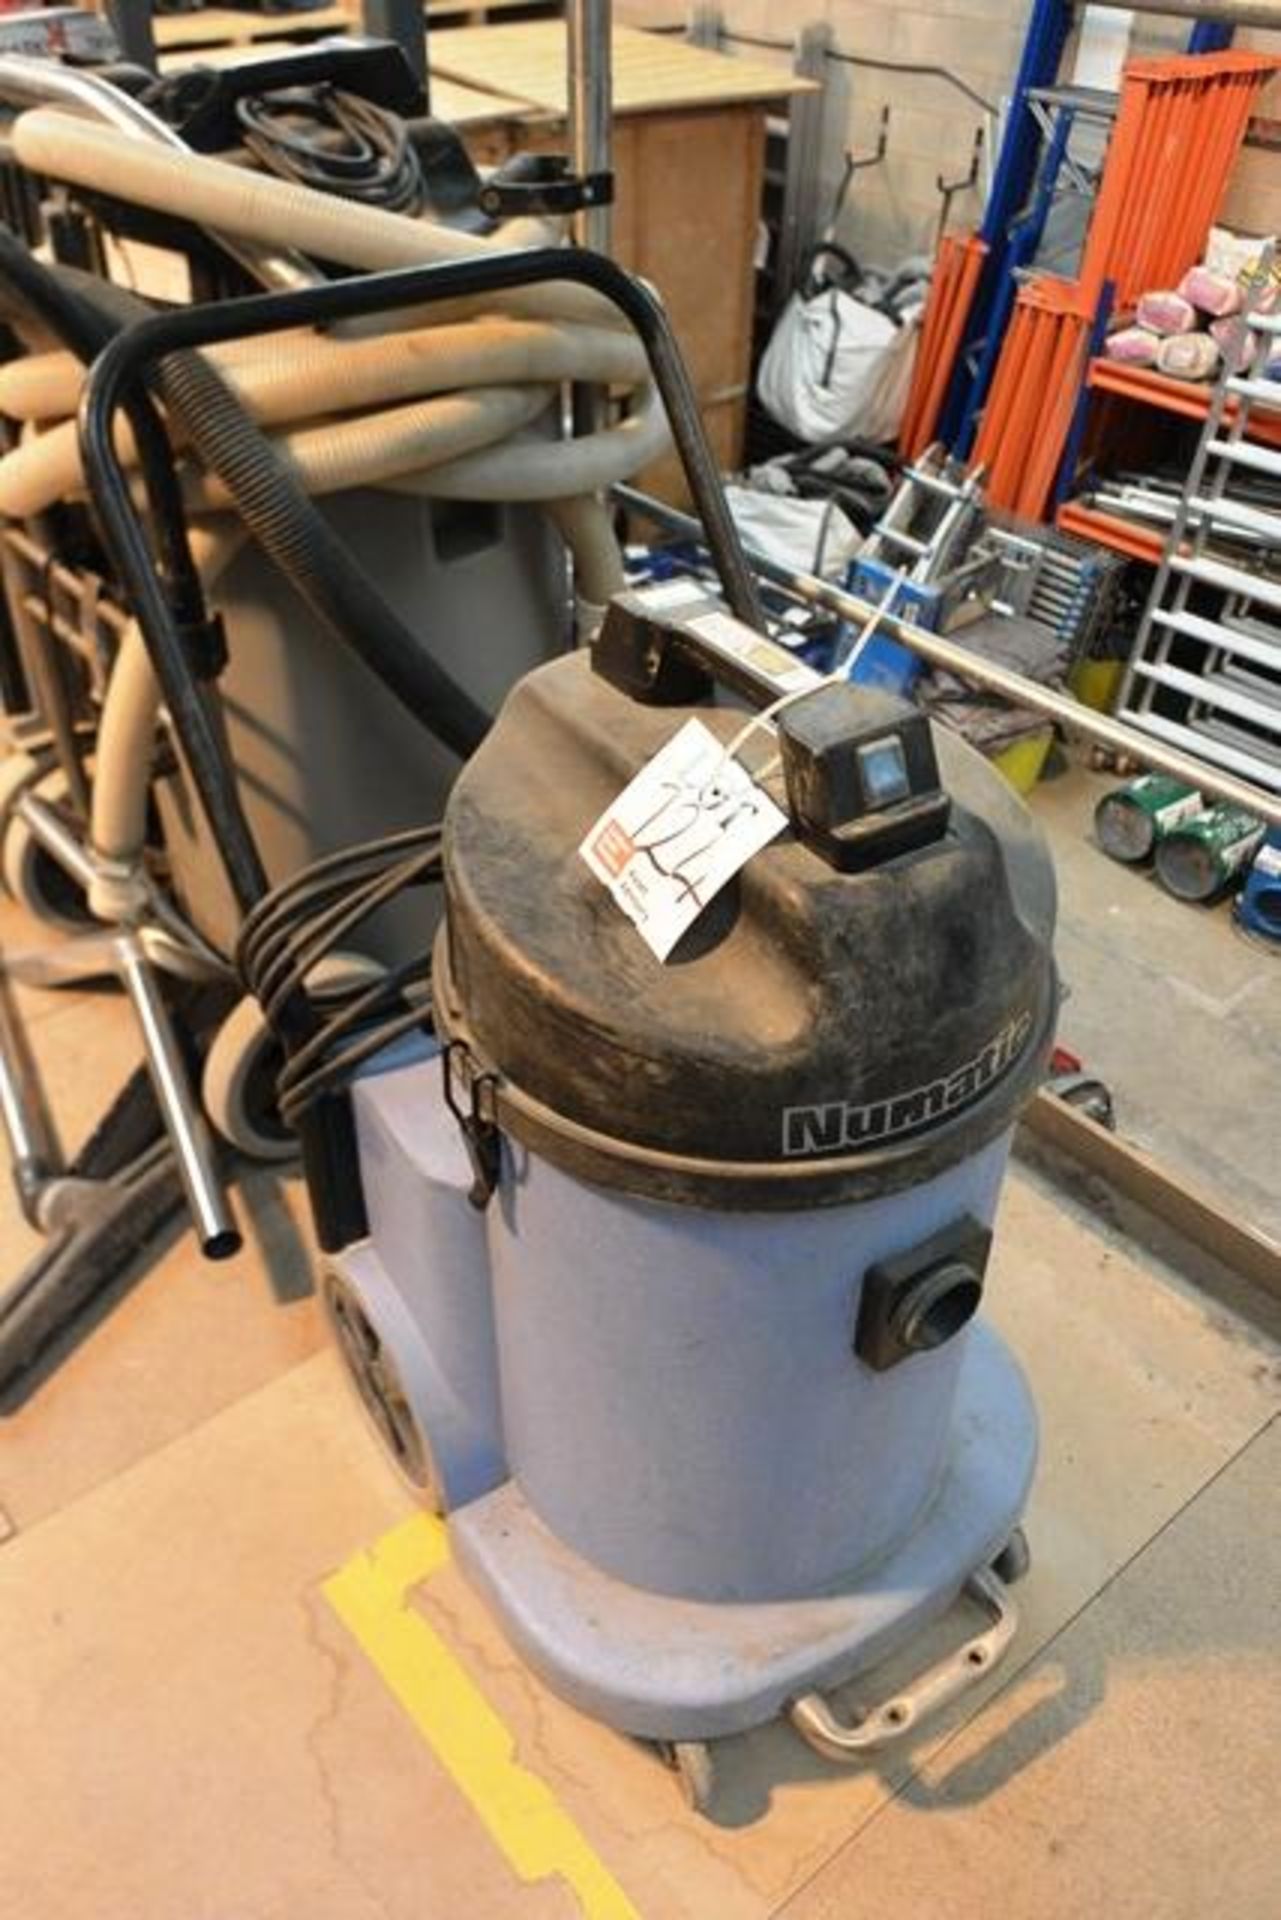 Numatic WVD 900-2 110v vacuum cleaner and Hilti VC-40-UM 110v vacuum